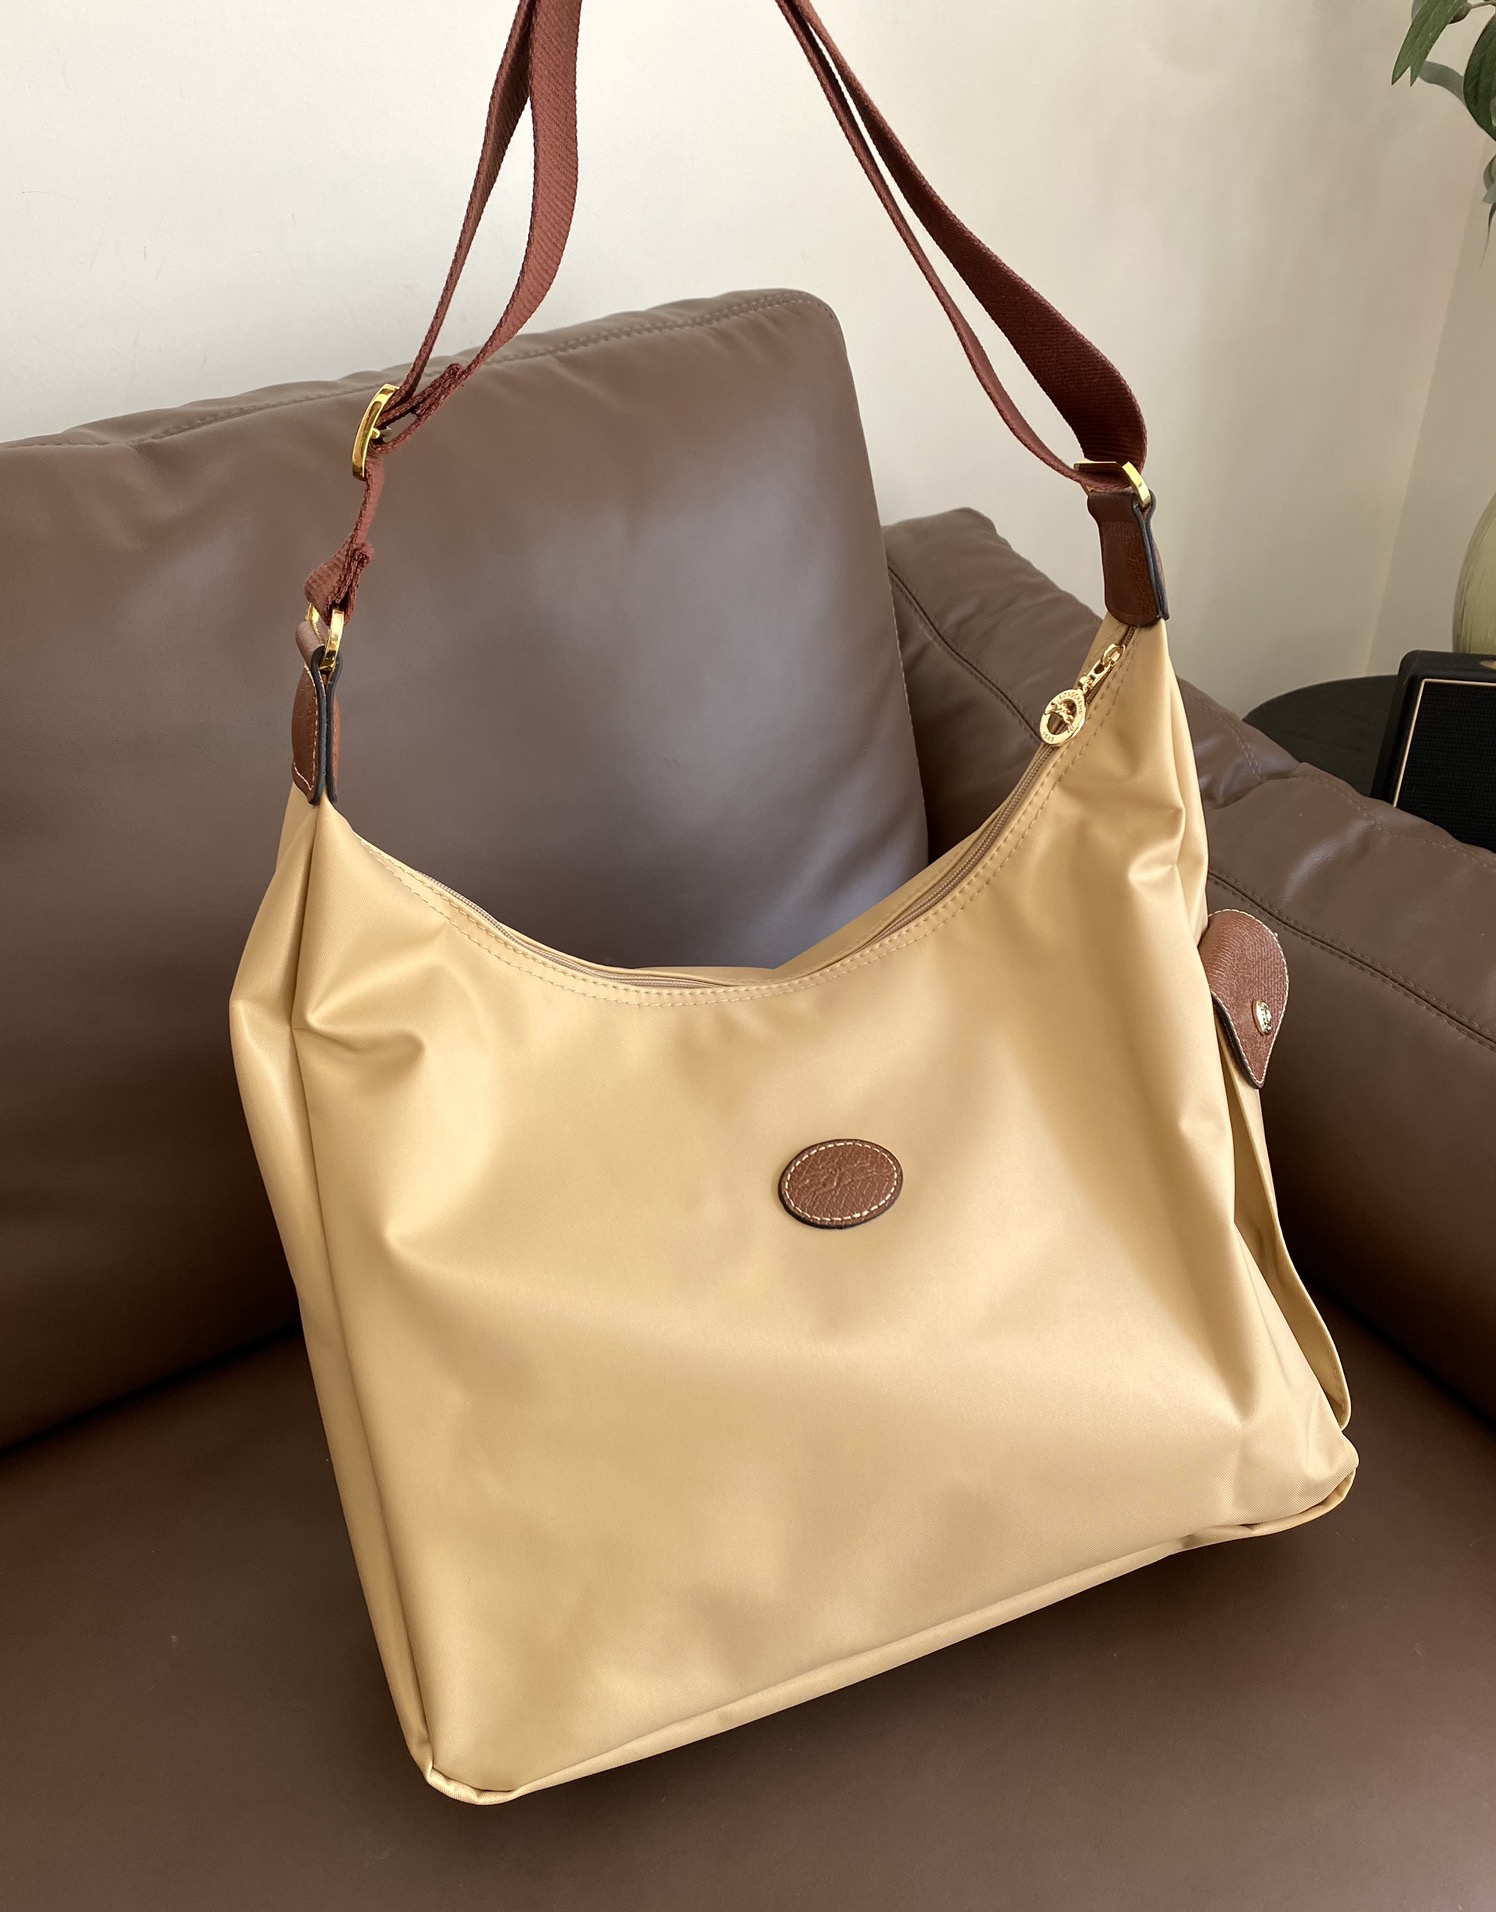 LONGCHAMP Brown Leather Shoulder Bag, Hobo Silver Studs. Made in France 🇫🇷